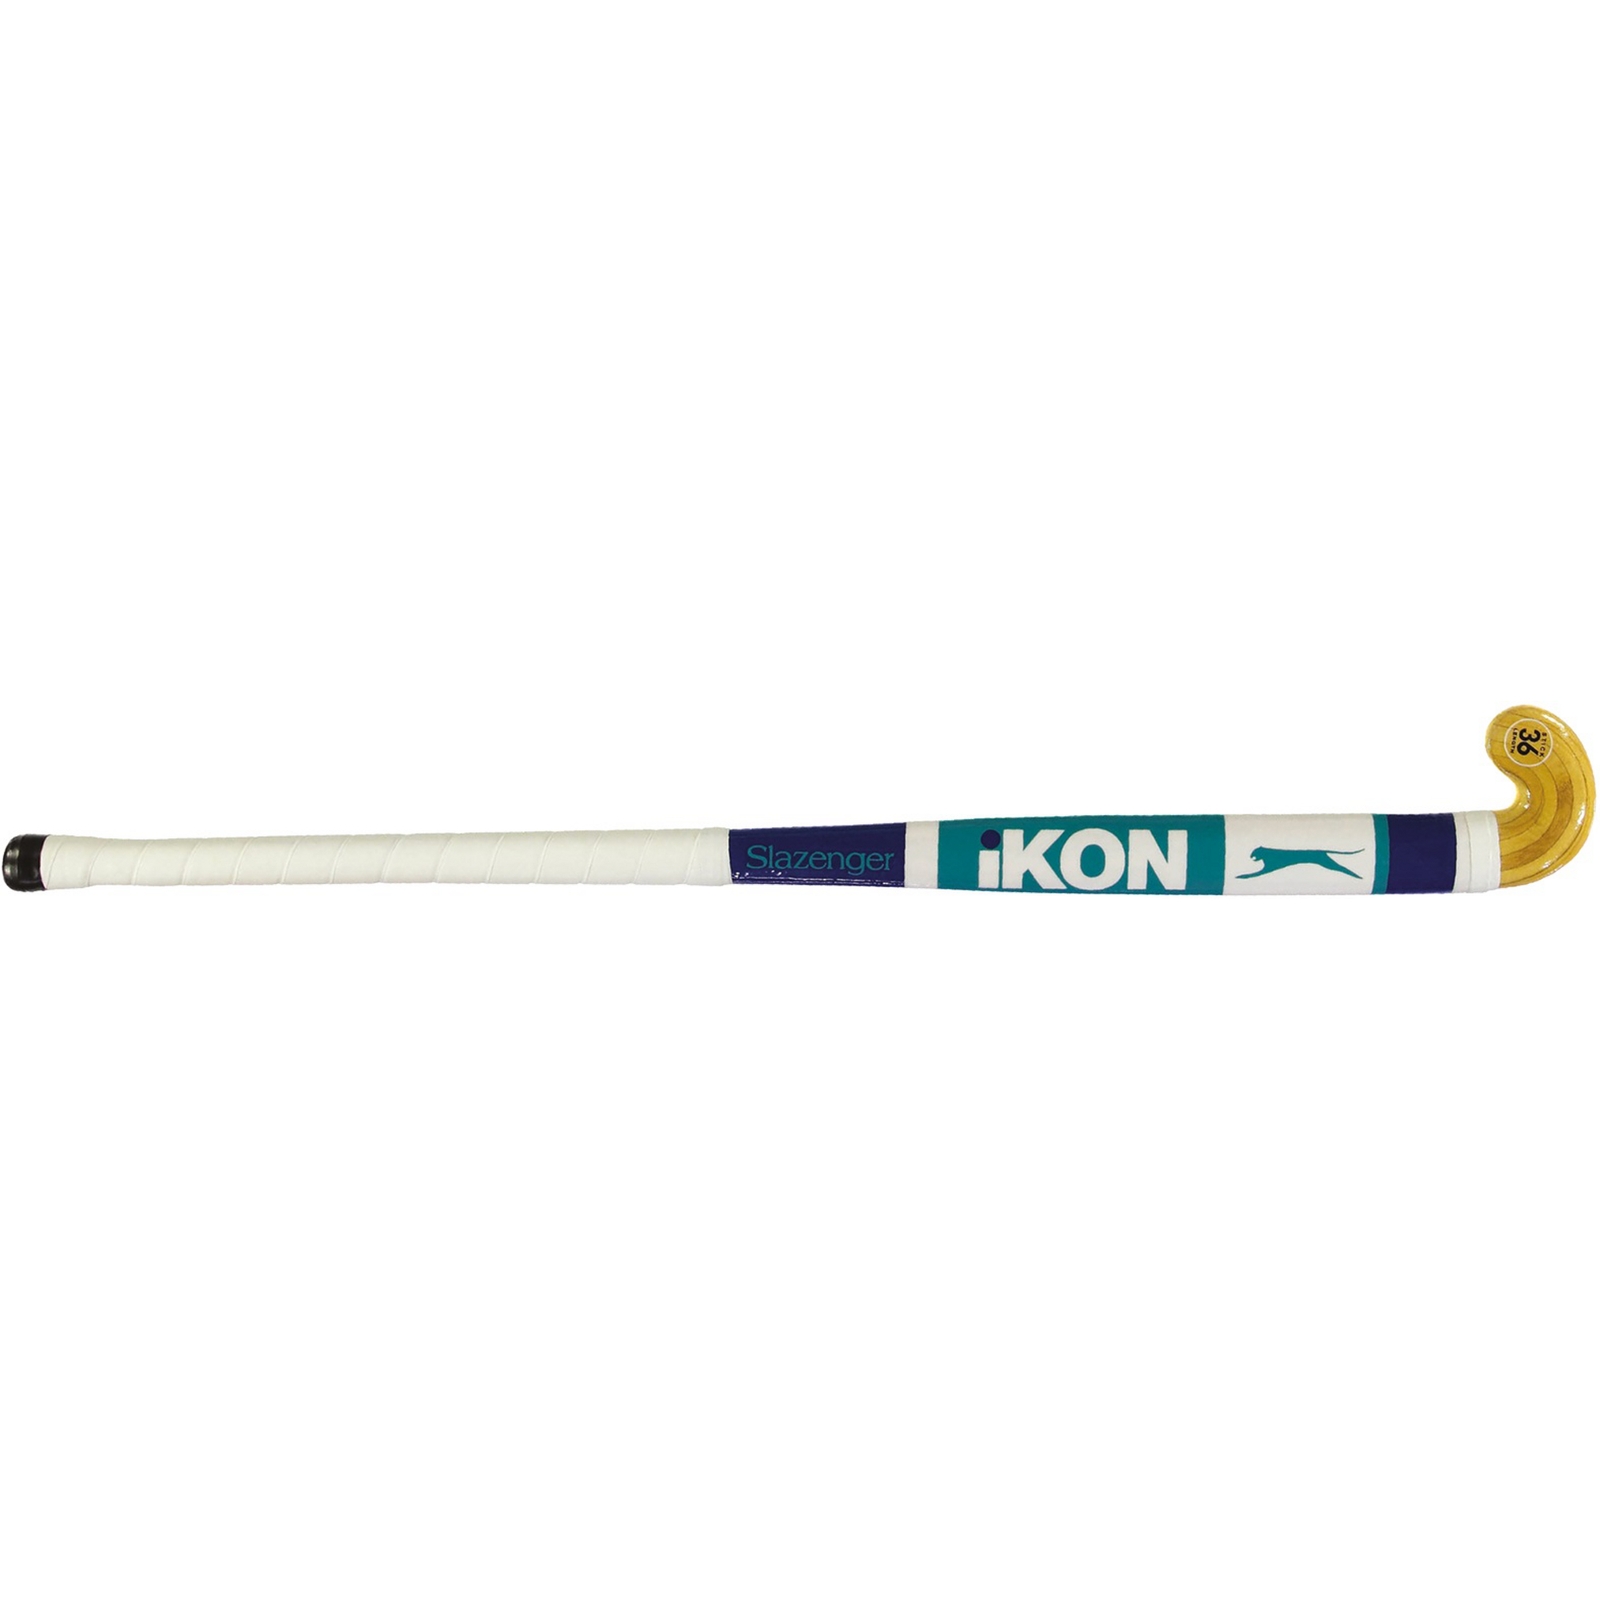 Slazenger Ikon Hockey Stick - 36"